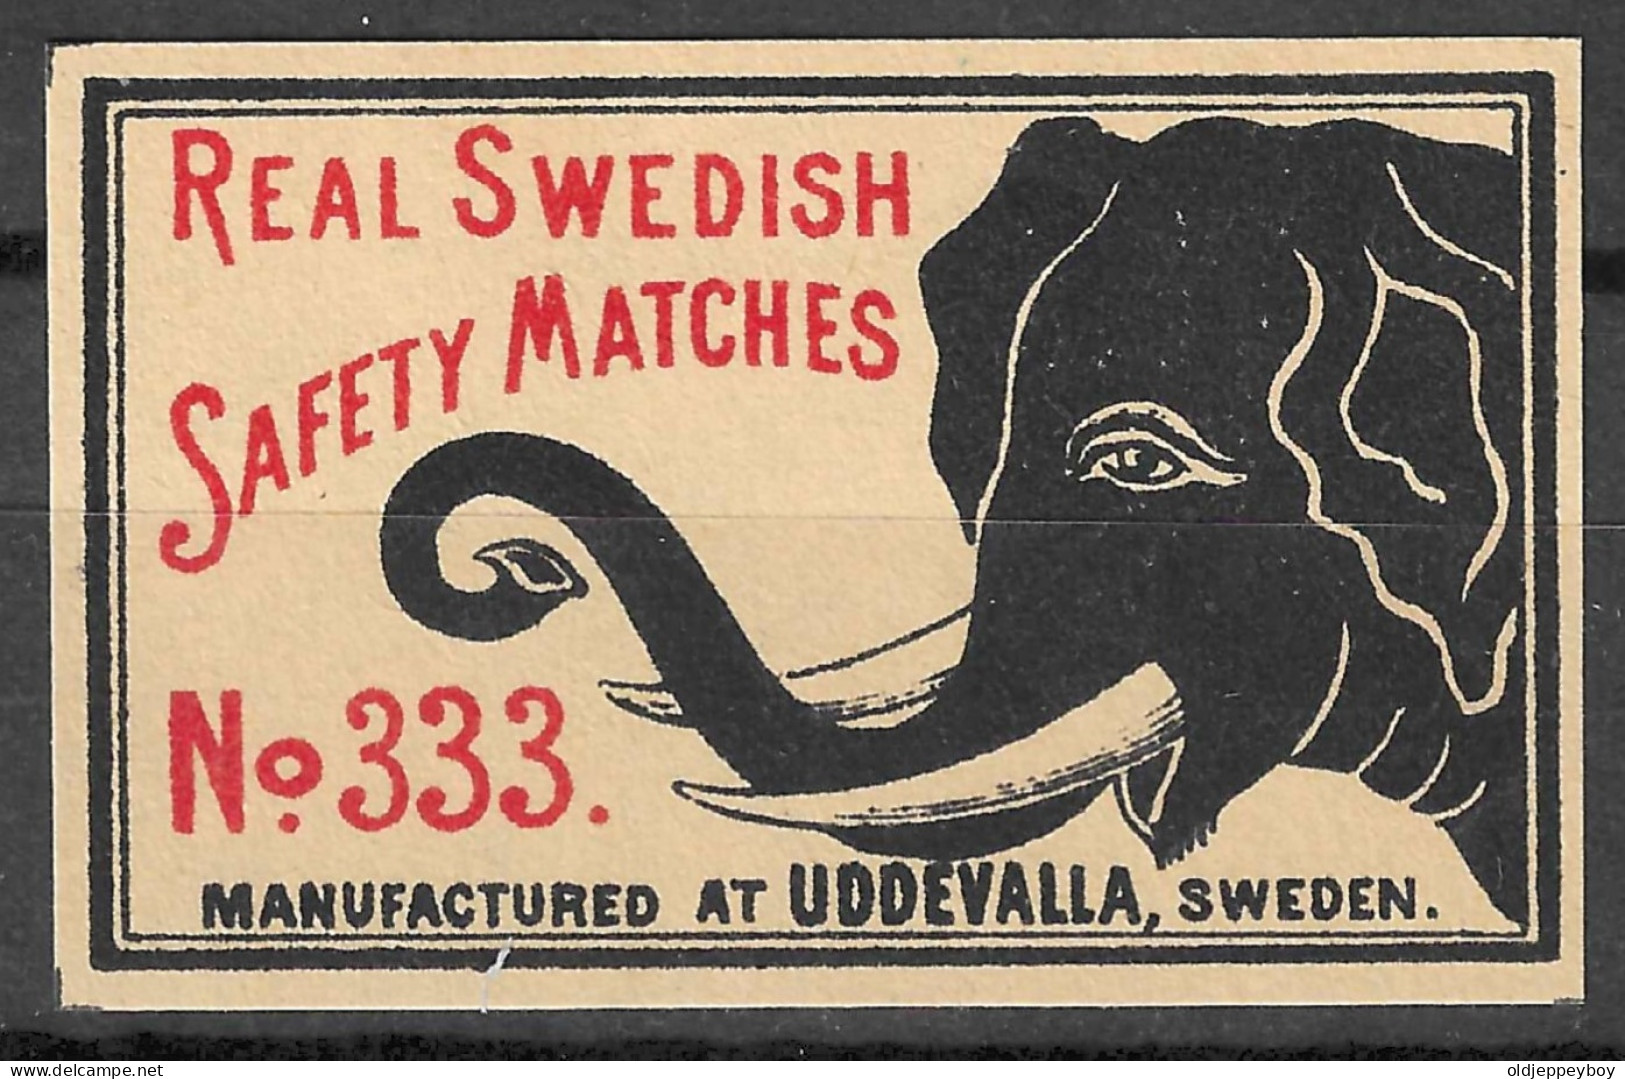 MADE IN SWEDEN UDDEVALLE VINTAGE Phillumeny MATCHBOX LABEL REAL SWEDISH SAFETY MATCHES Nº333  5.5  X 3.5 CM  RARE - Zündholzschachteletiketten